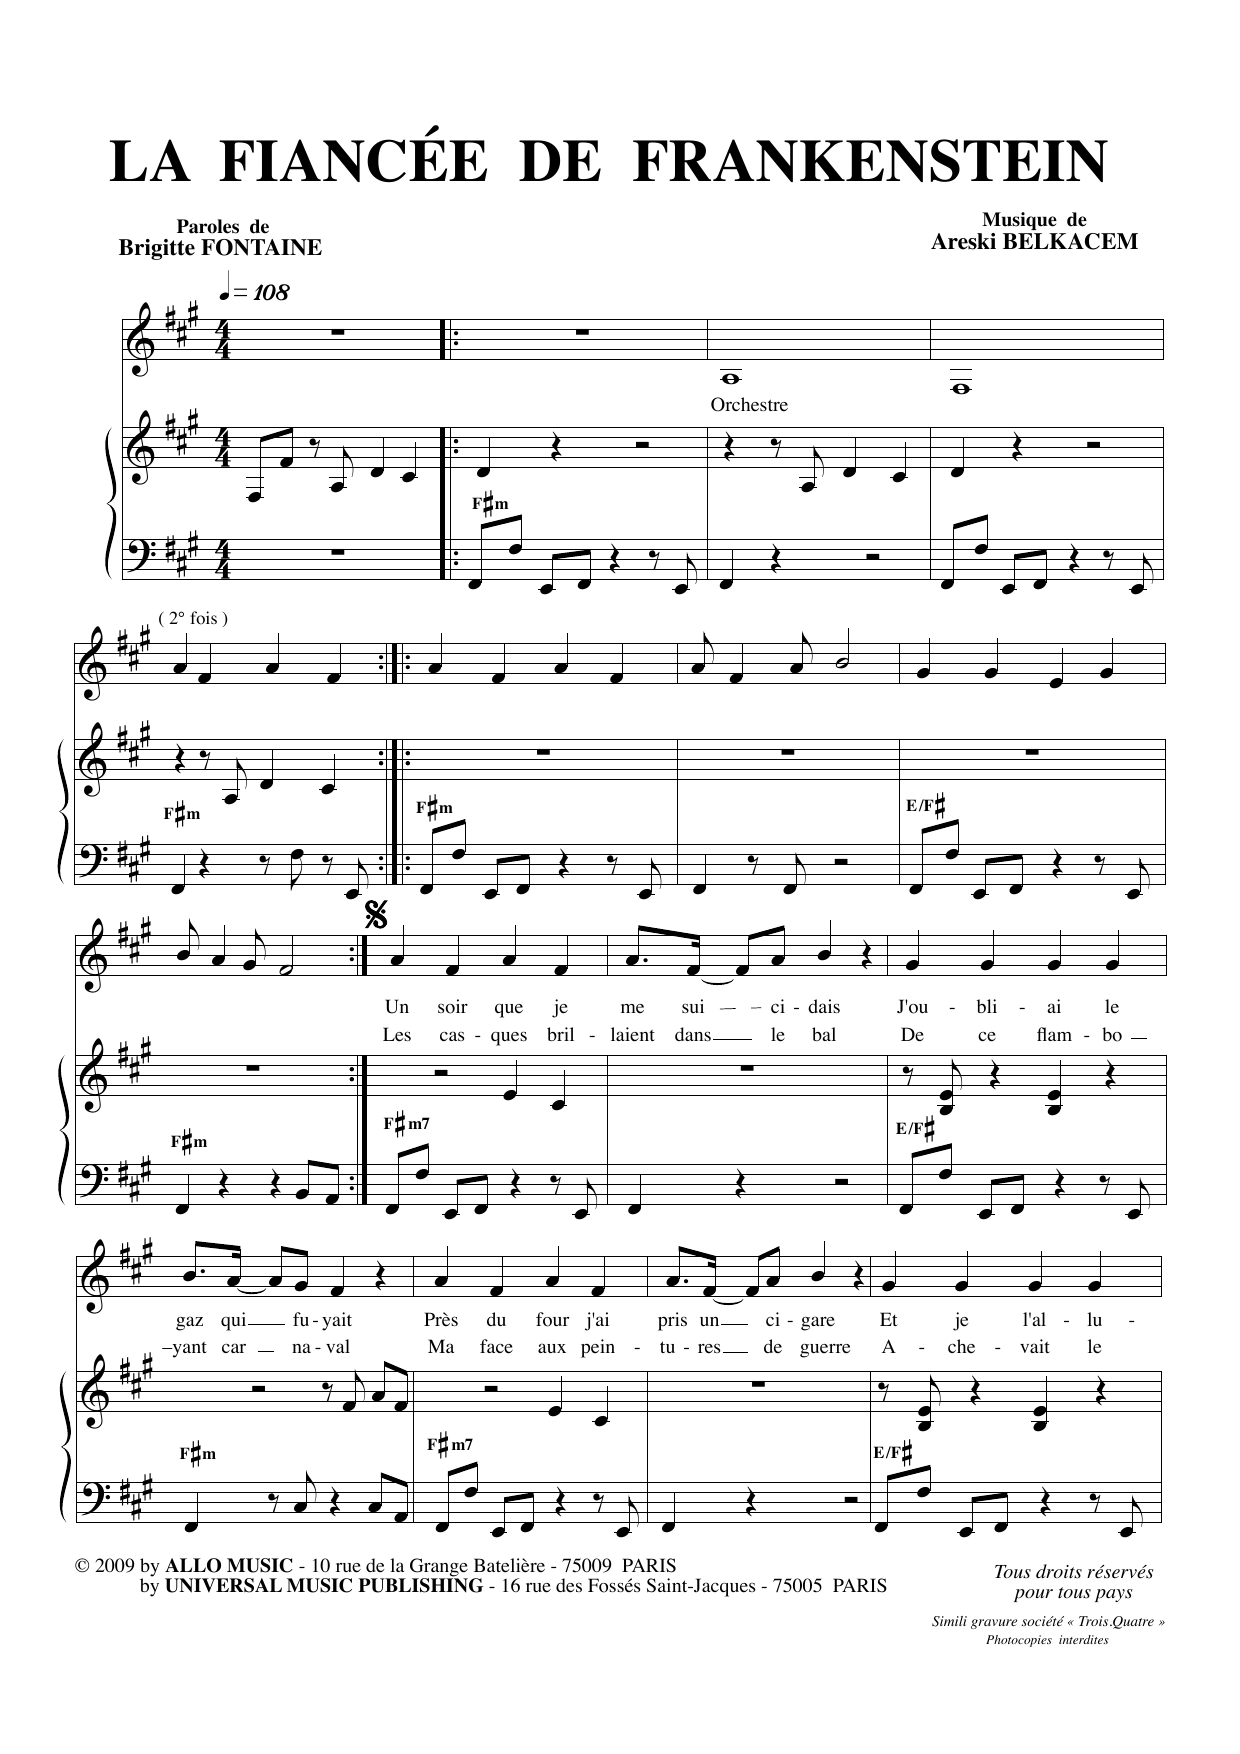 Download Brigitte Fontaine & Areski Belkacem La Fiancée de Frankenstein Sheet Music and learn how to play Piano & Vocal PDF digital score in minutes